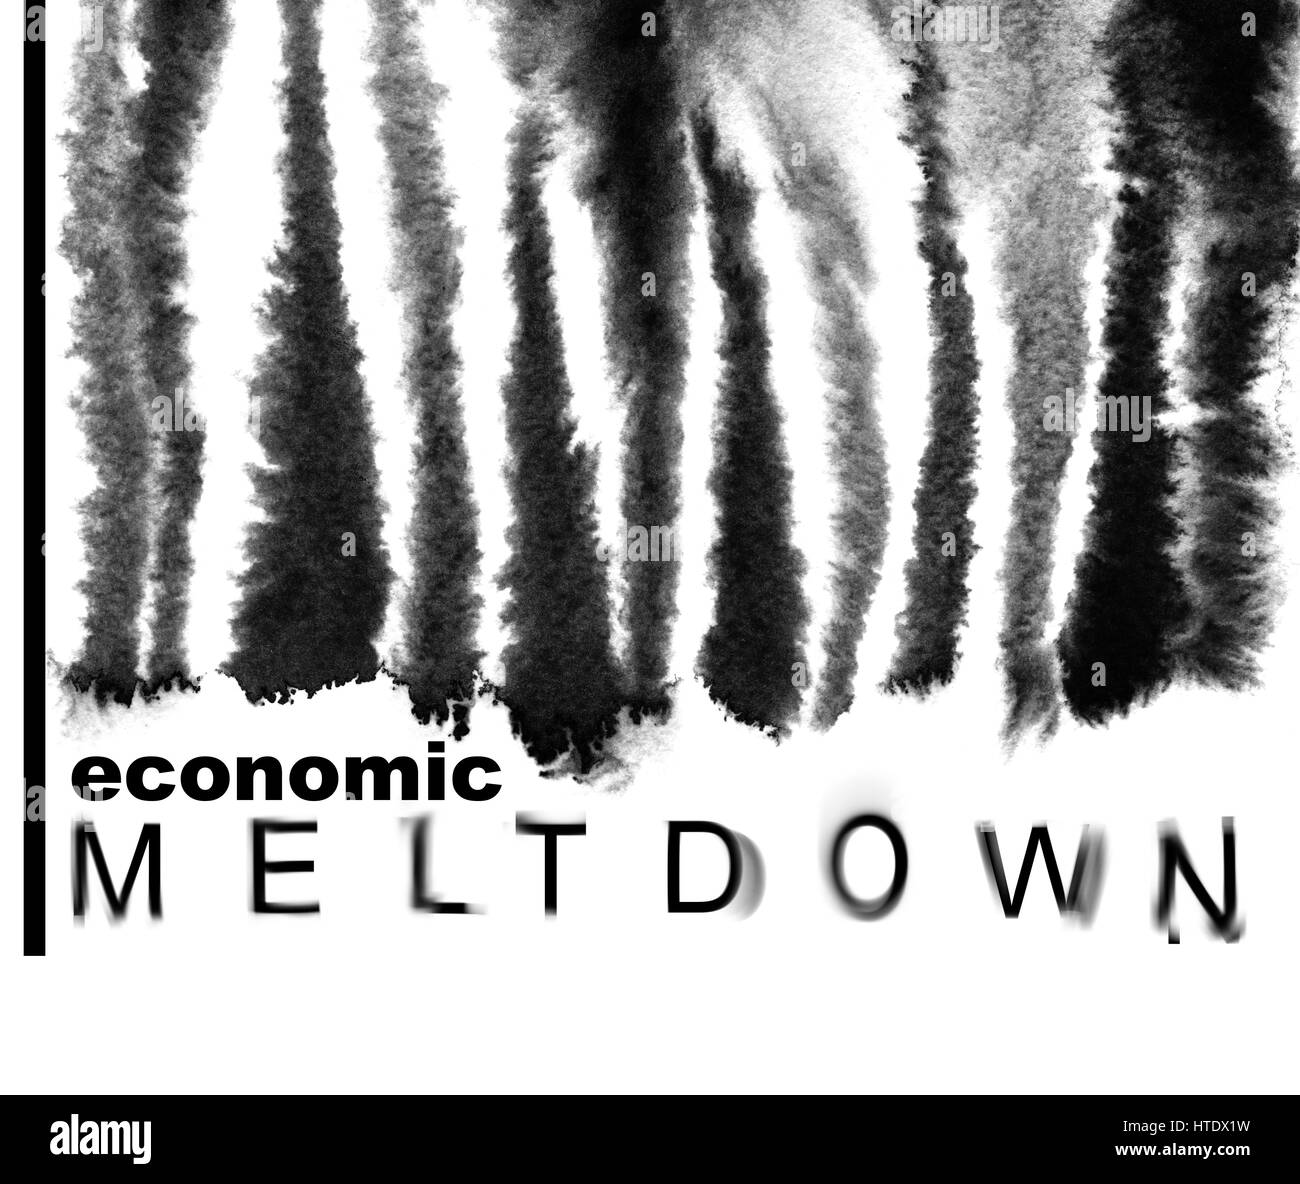 Economic meltdown. Melted down bar-code. Economic recession concept Stock Photo